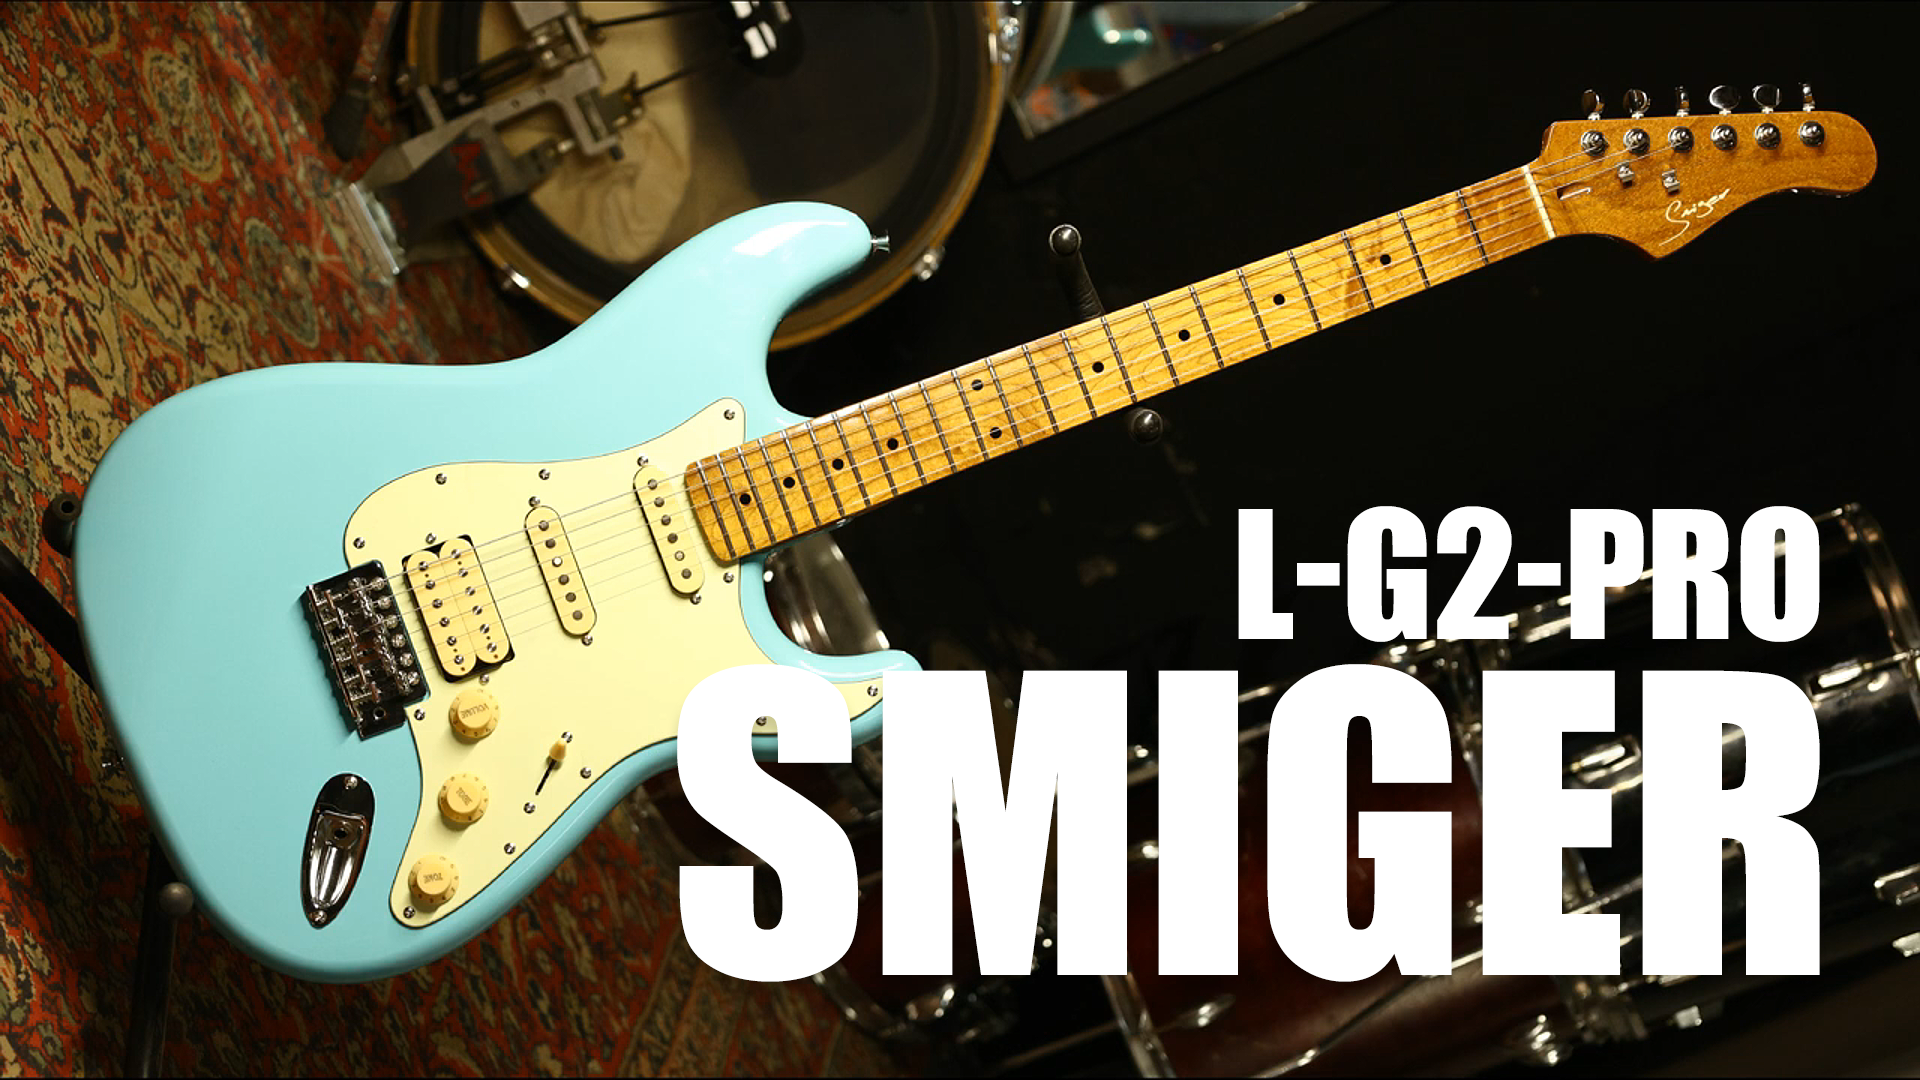 L-G2-pro Smiger electric guitar